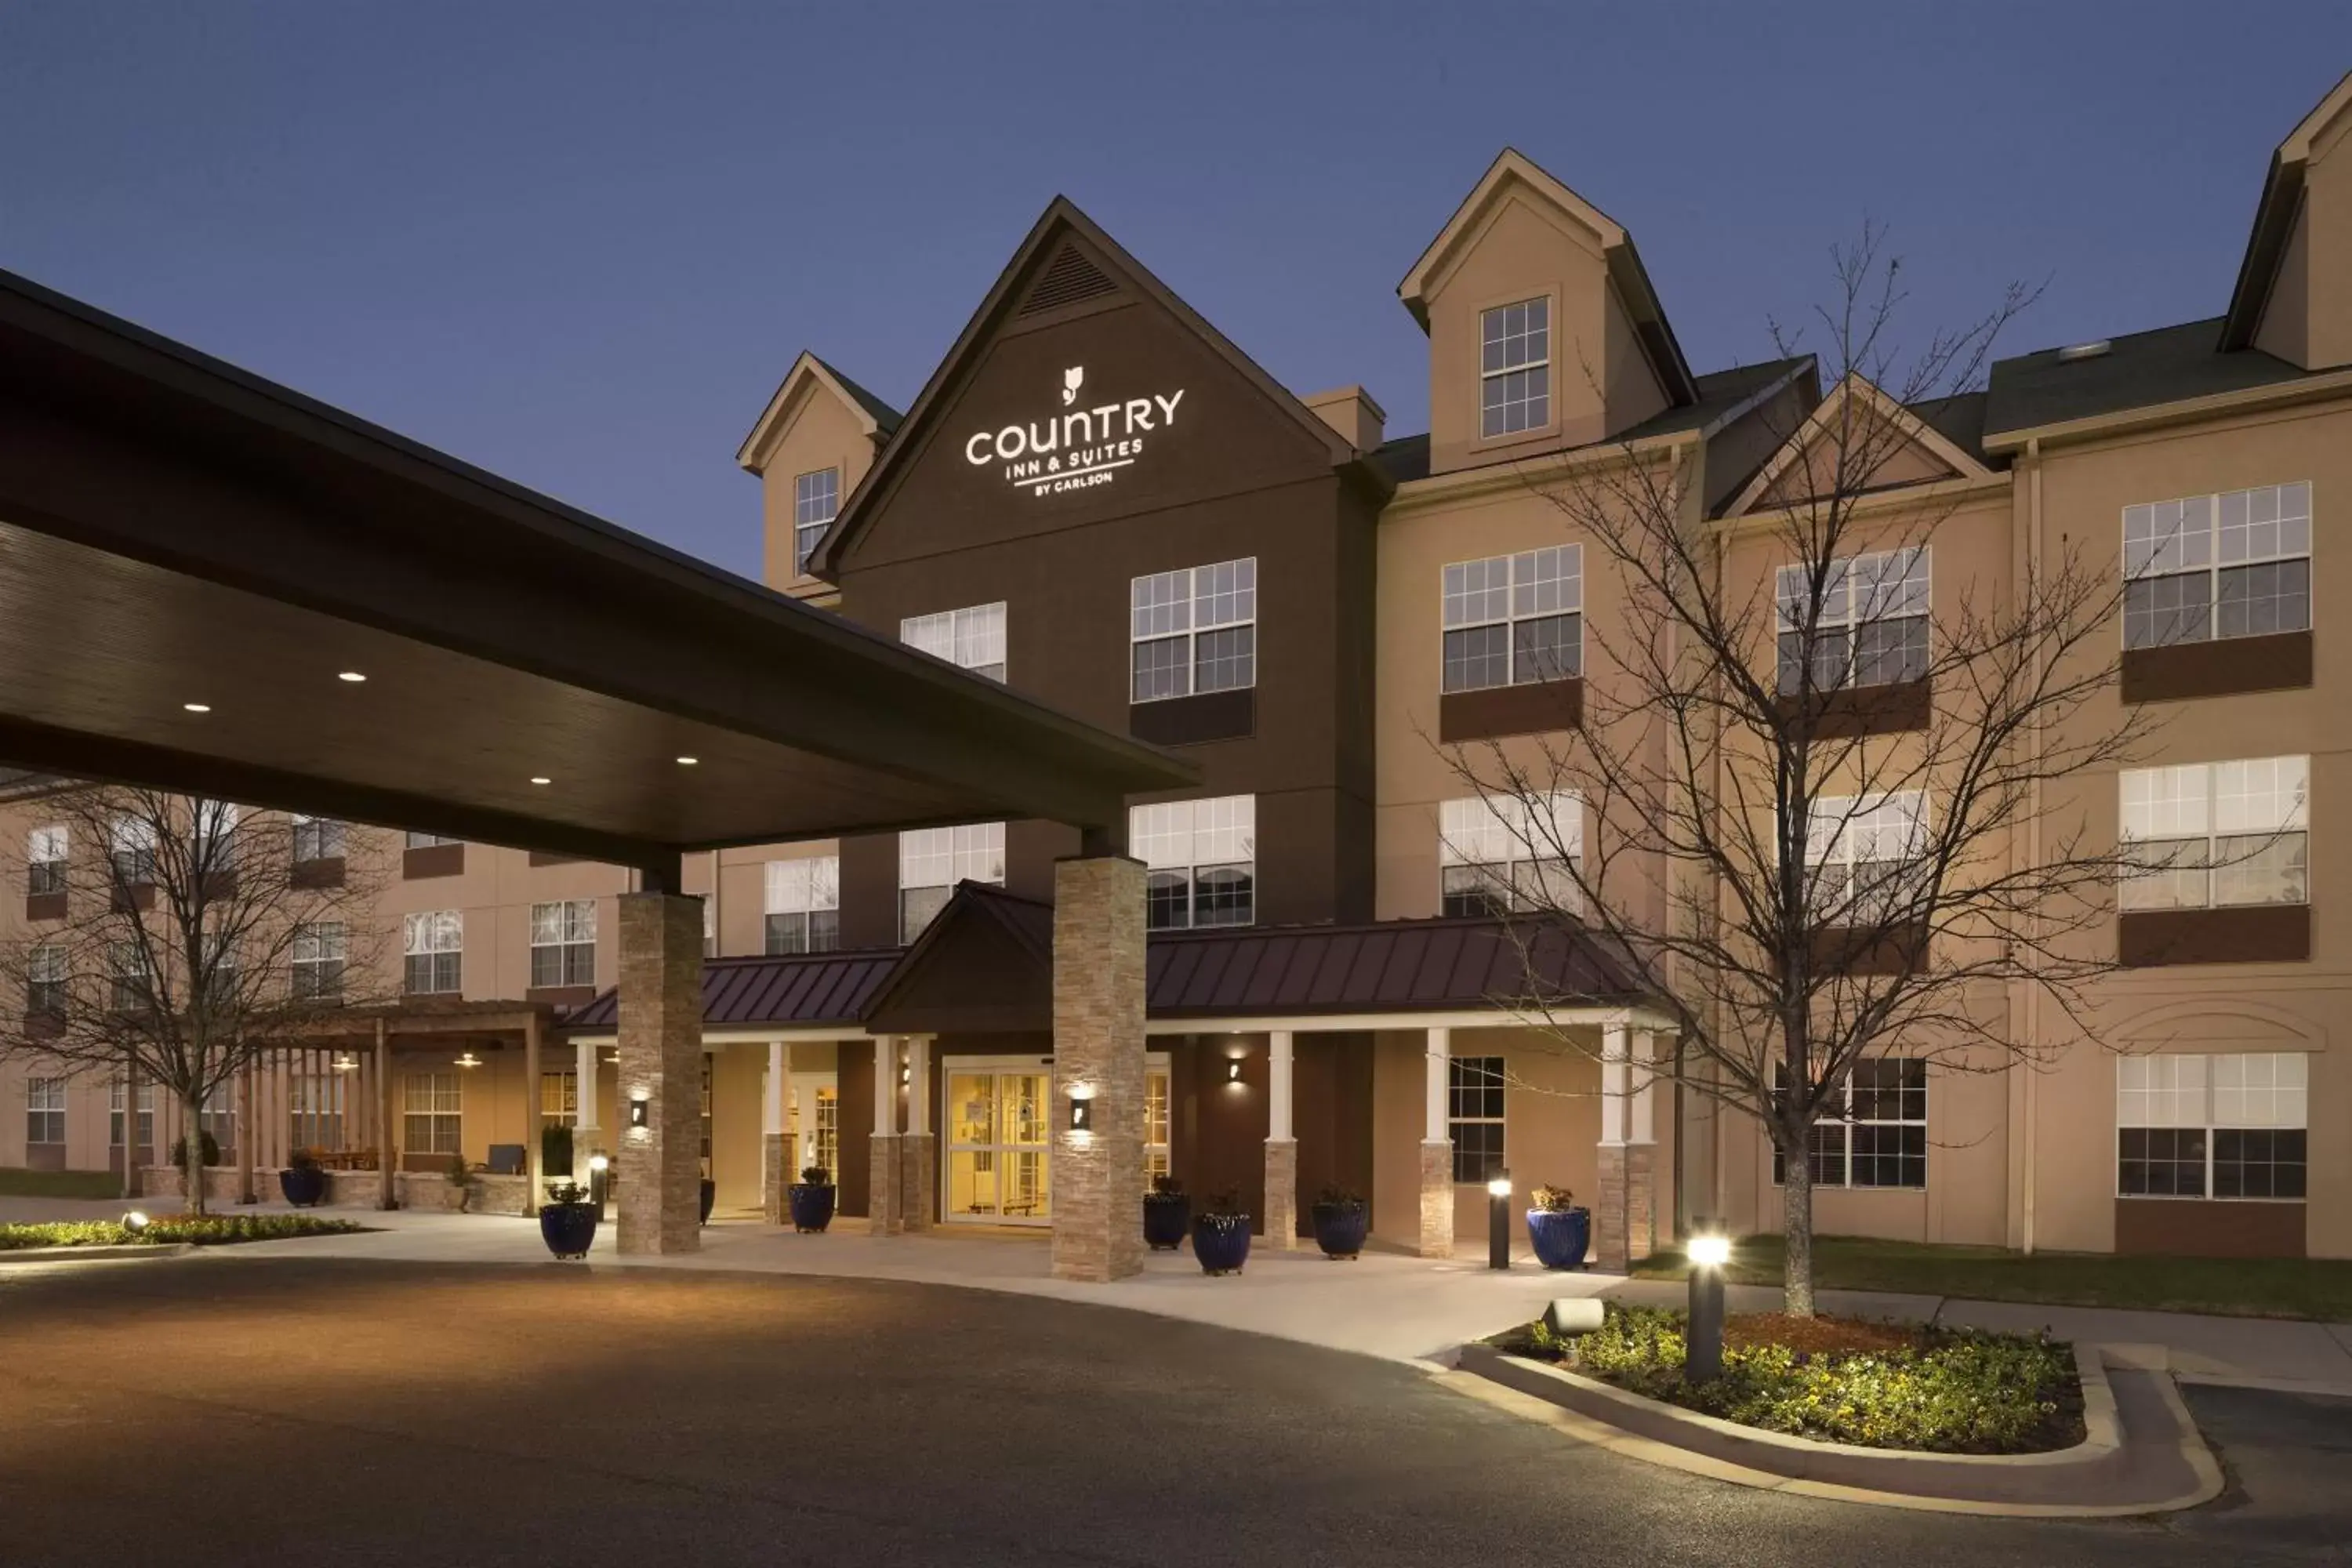 Facade/Entrance in Country Inn & Suites by Radisson, Aiken, SC